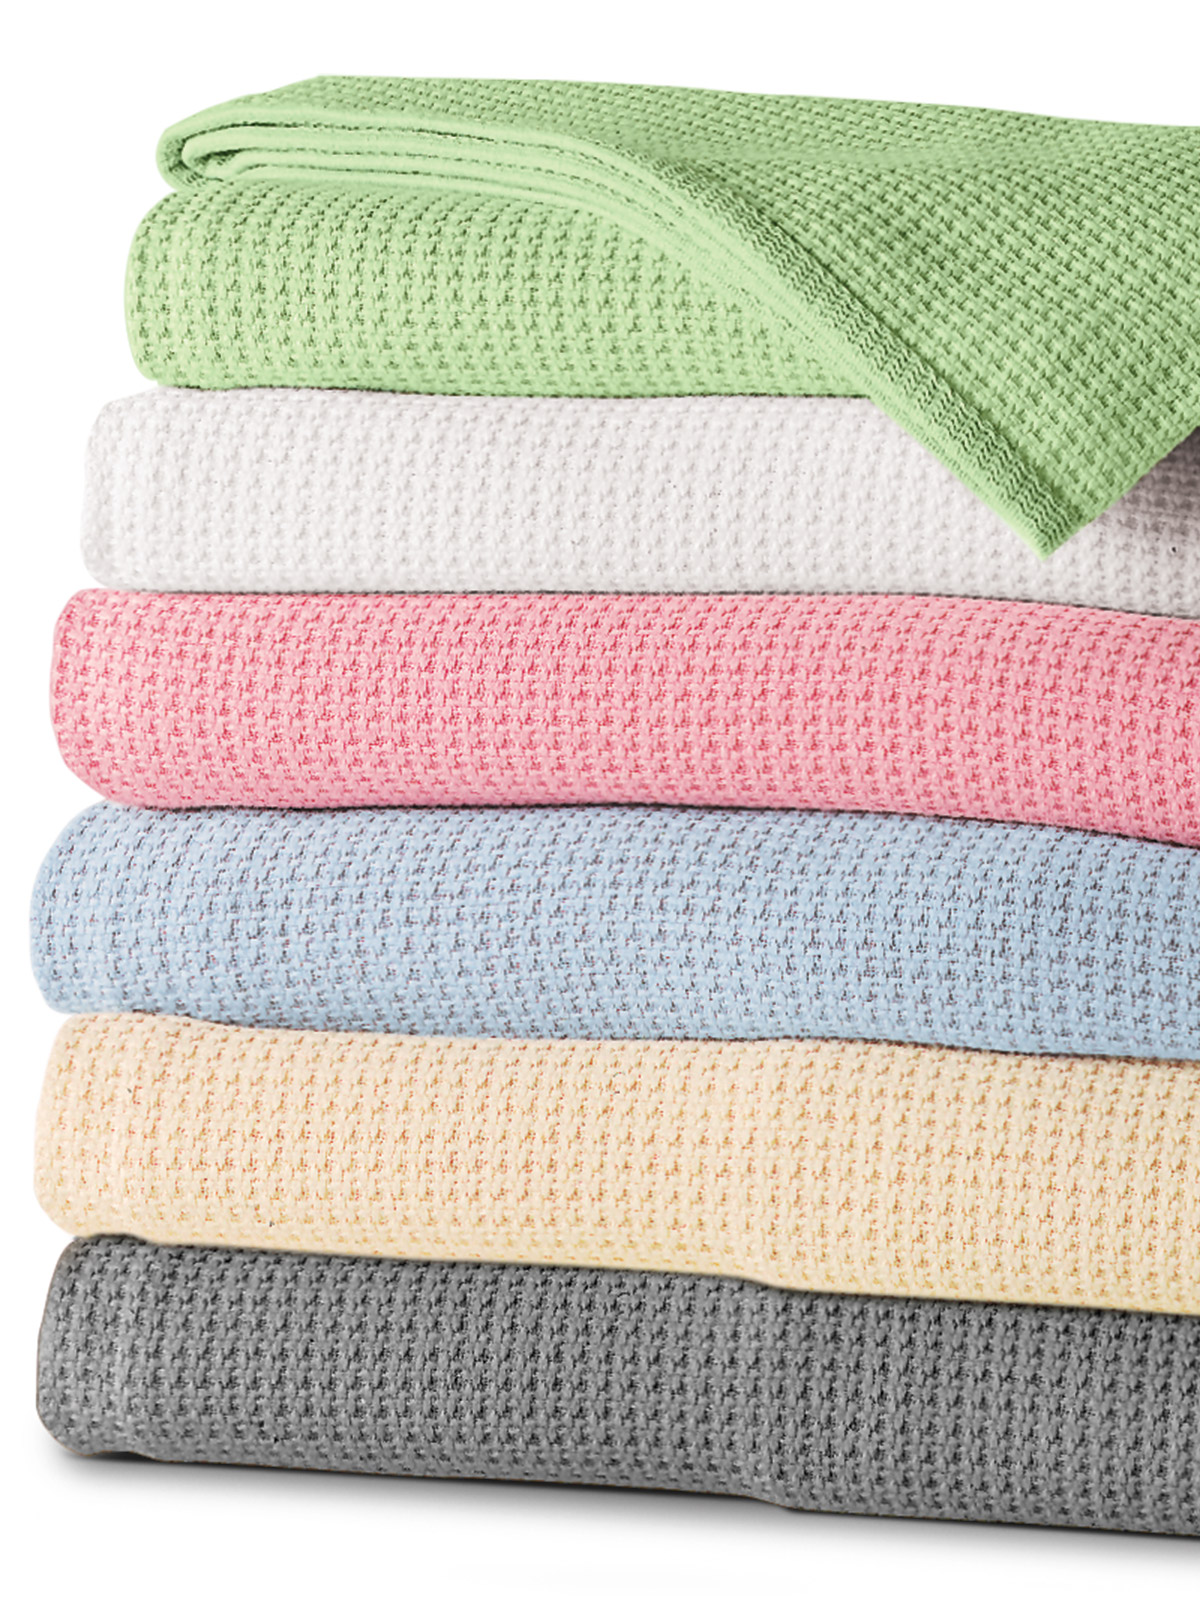 Cotton Thermal Blankets - Luxury Blankets - Luxury Bedding